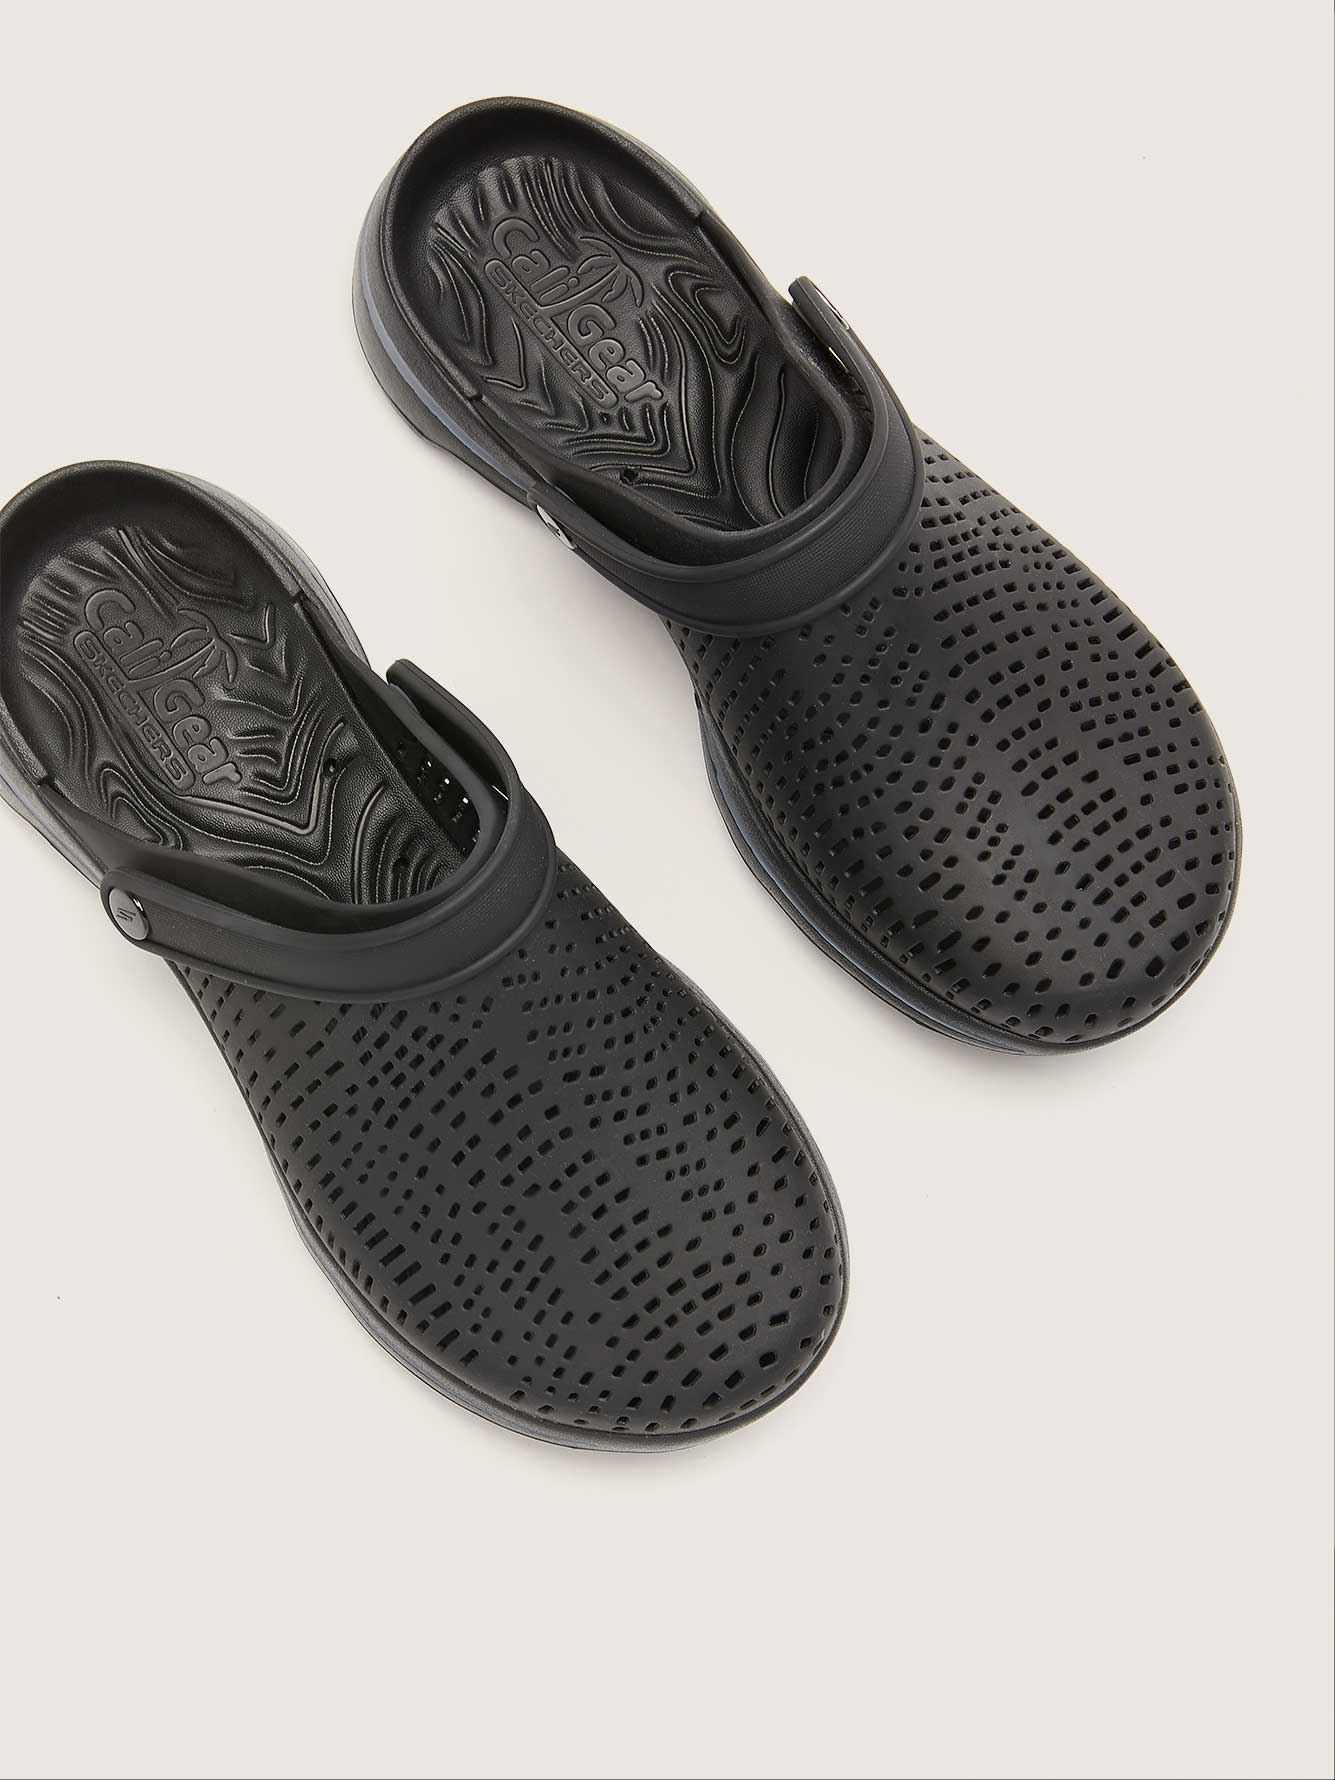 Wide-Fit Cali Gear Go Walk 5 Slip-On Clog Sandals - Skechers